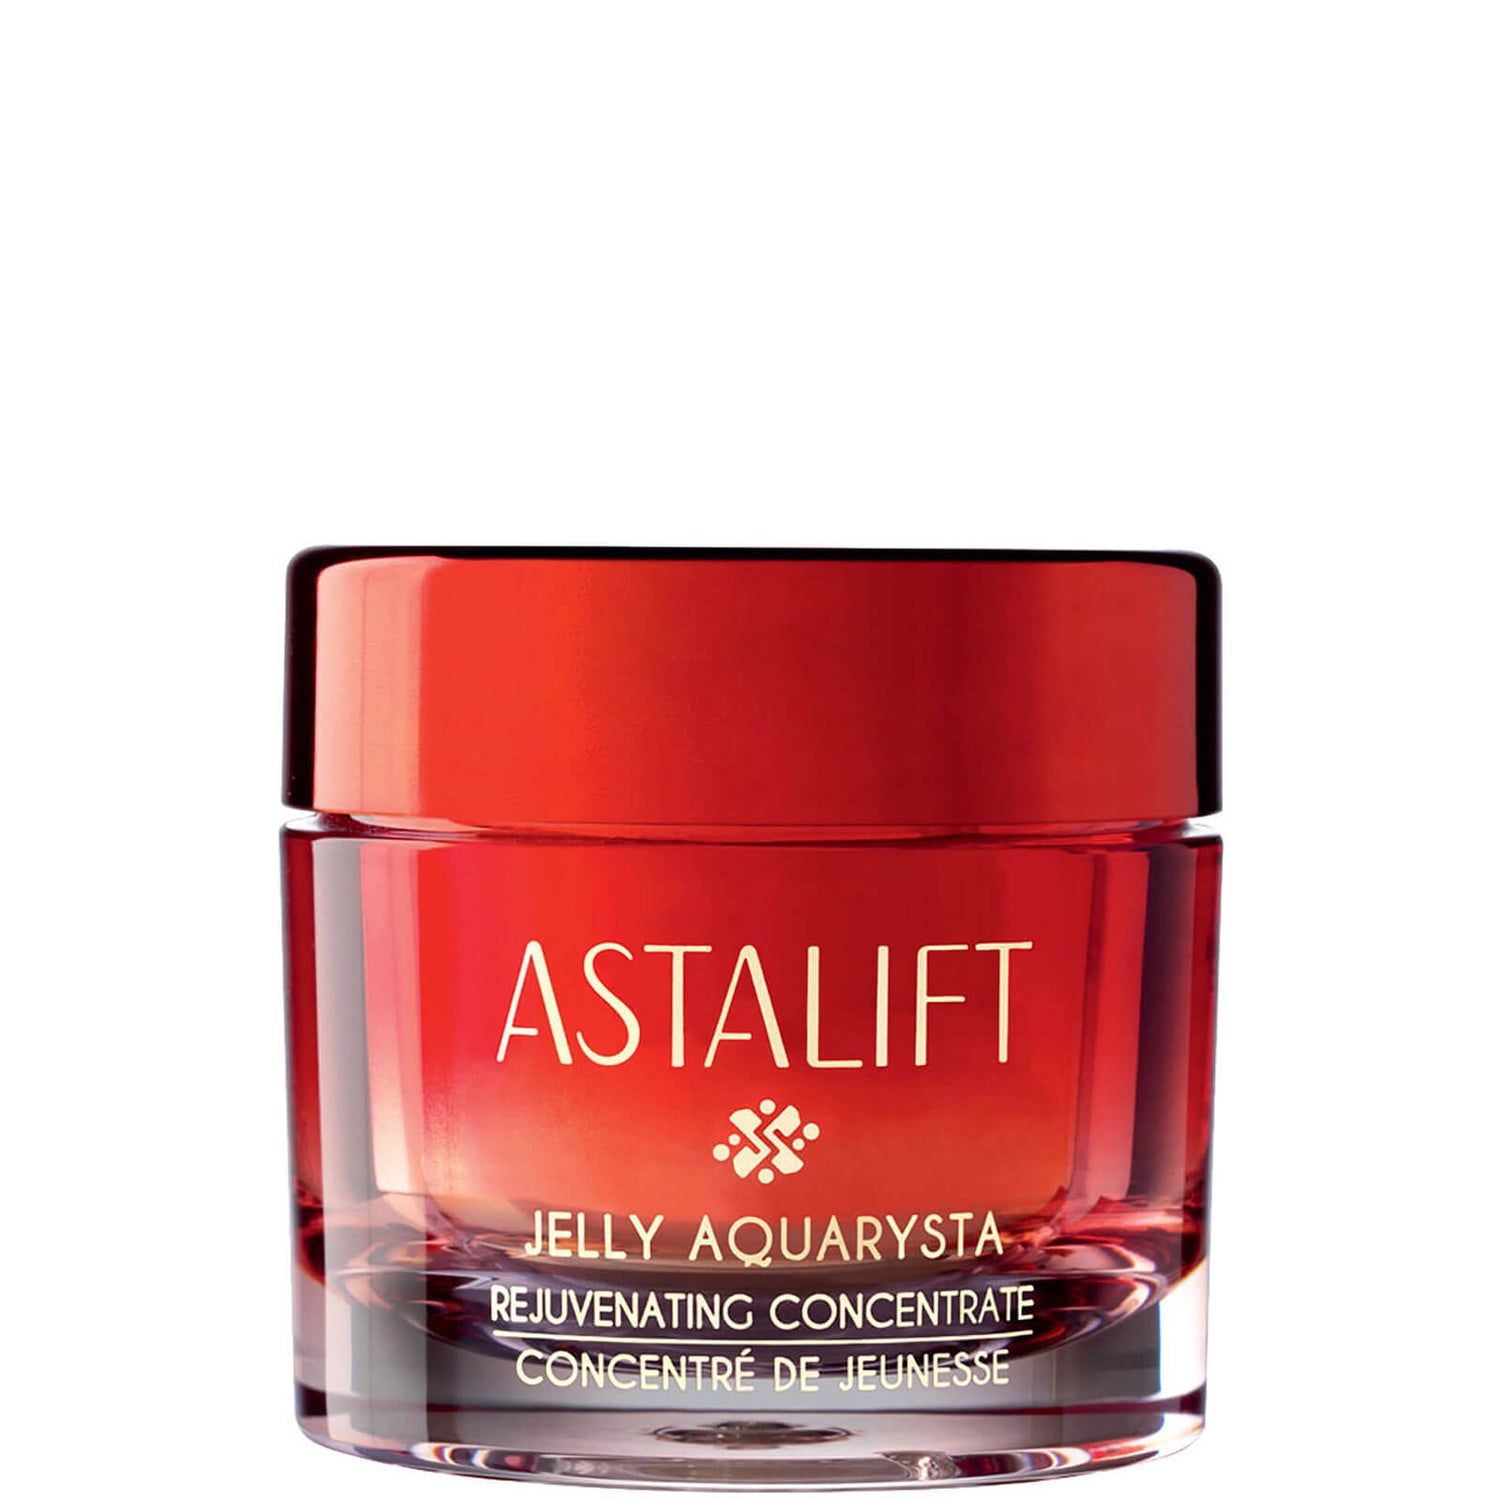 Astalift Jelly Aquarysta Rejuvenating Concentrate Serum (60g)